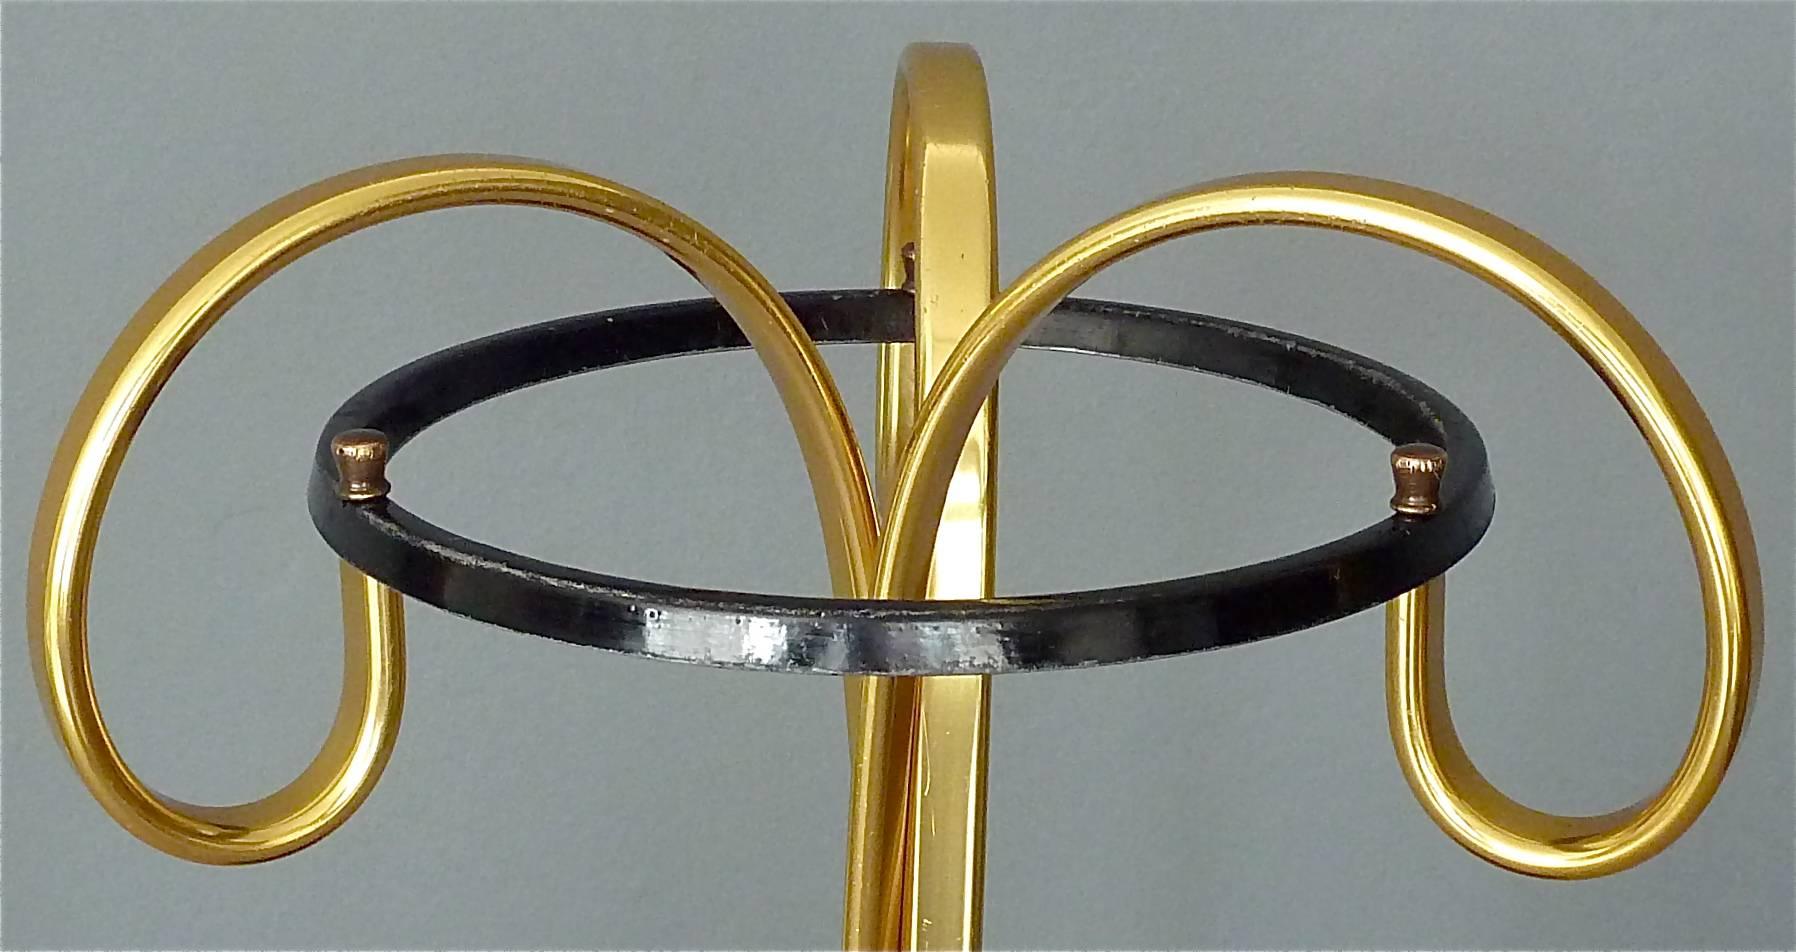 Sculptural 1950s Midcentury Umbrella Stand Golden Anodized Aluminum Black Iron For Sale 6